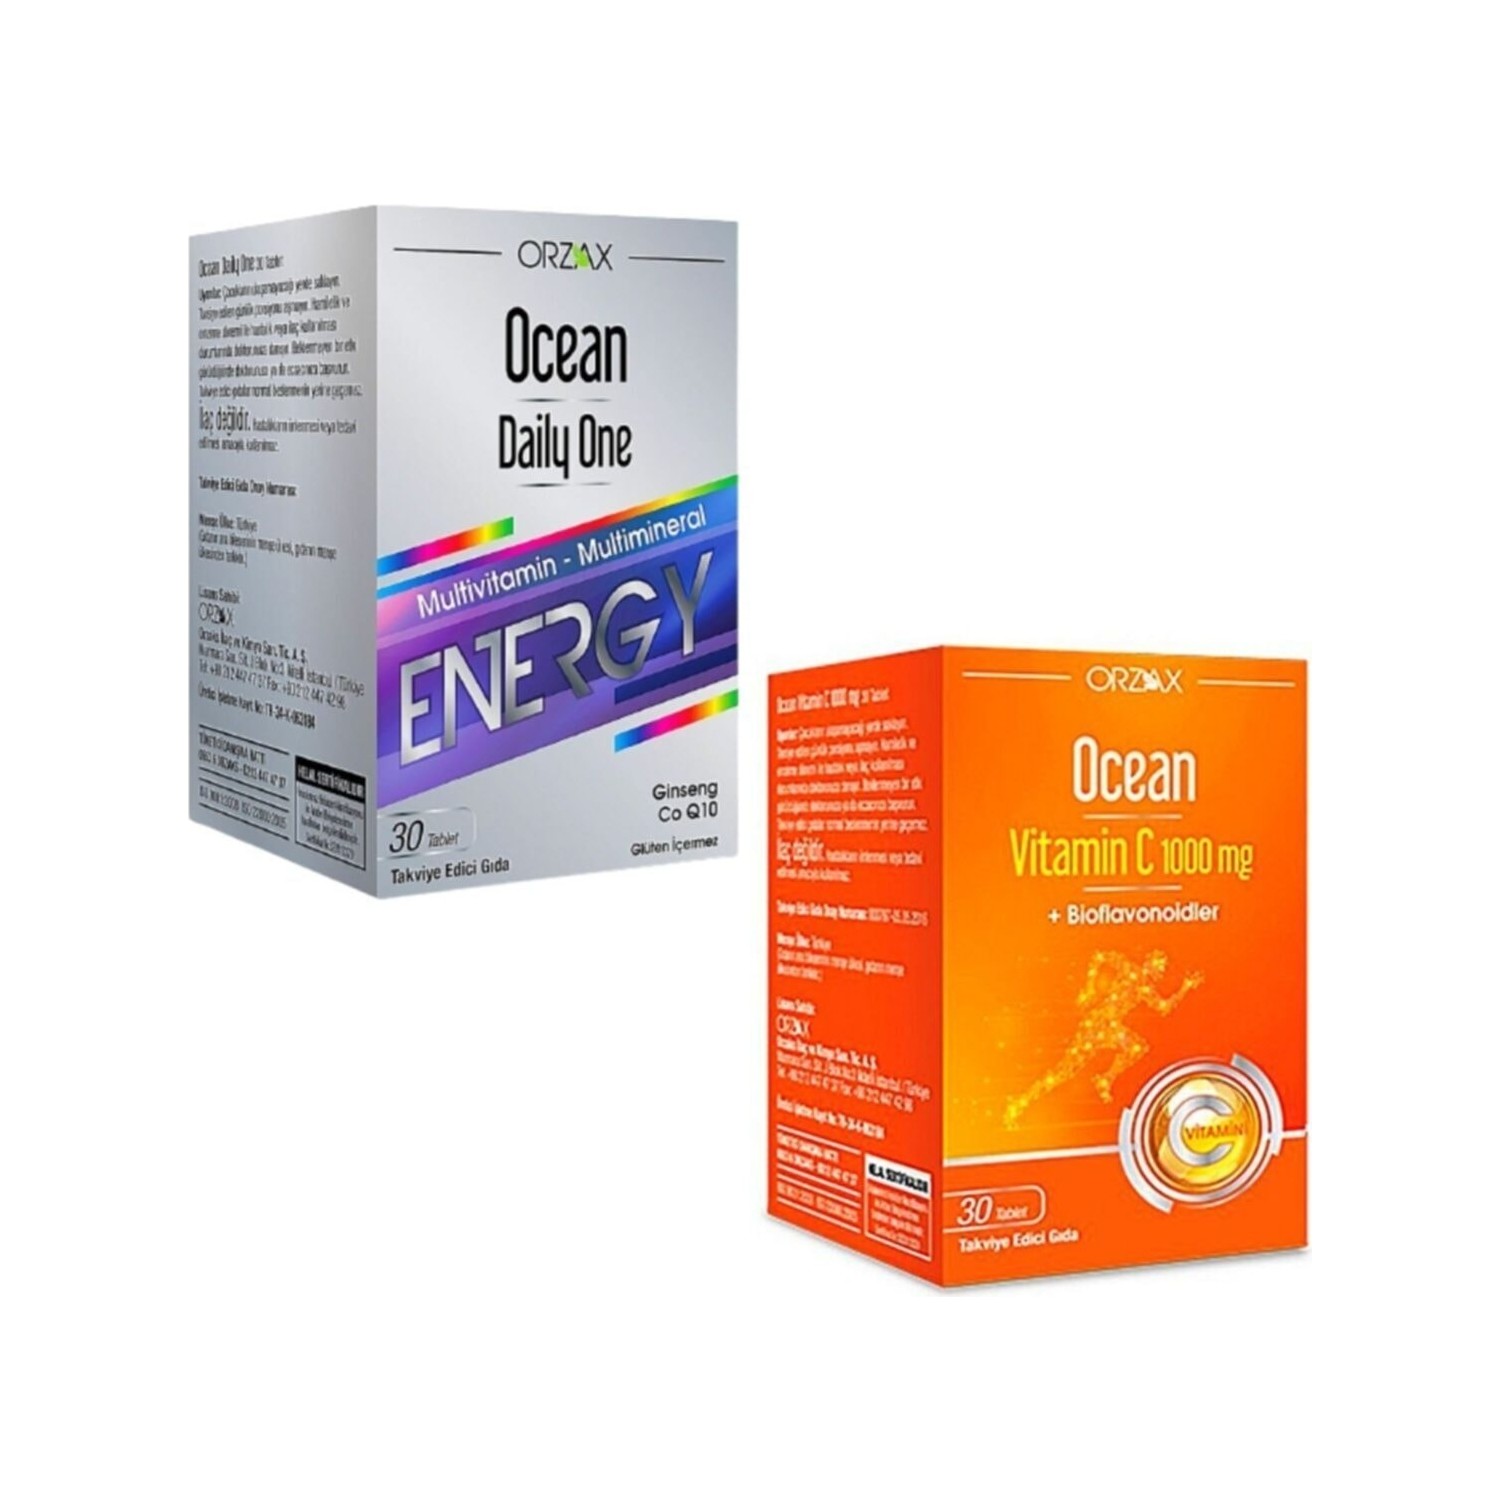 medik8 daily radiance vitamin c 50ml Мультивитамины Ocean Daily One Energy And Ocean Vitamin C Set